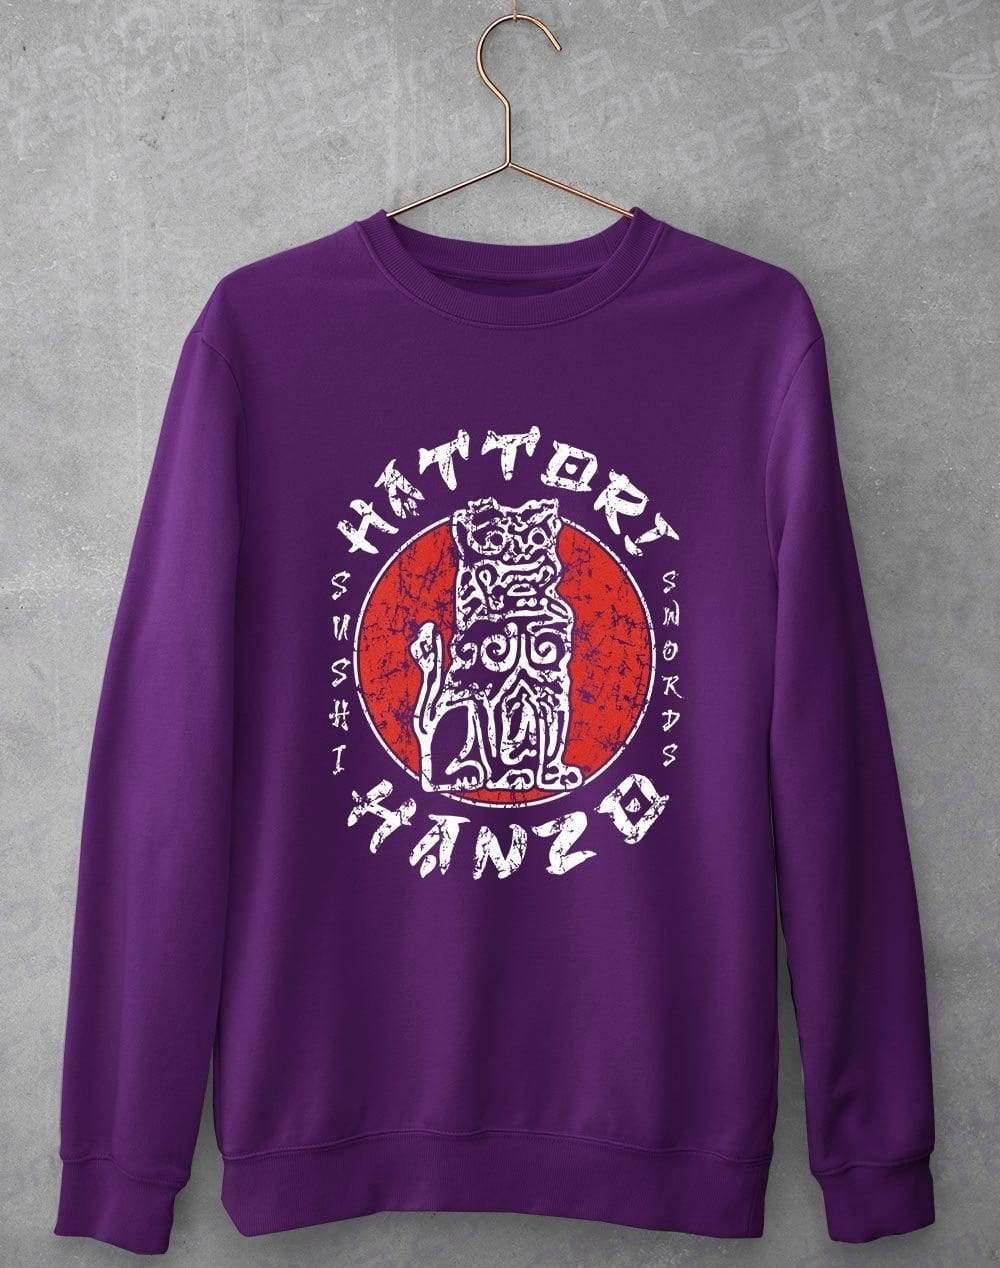 Hattori Hanzo Swords and Sushi Sweatshirt S / Purple  - Off World Tees